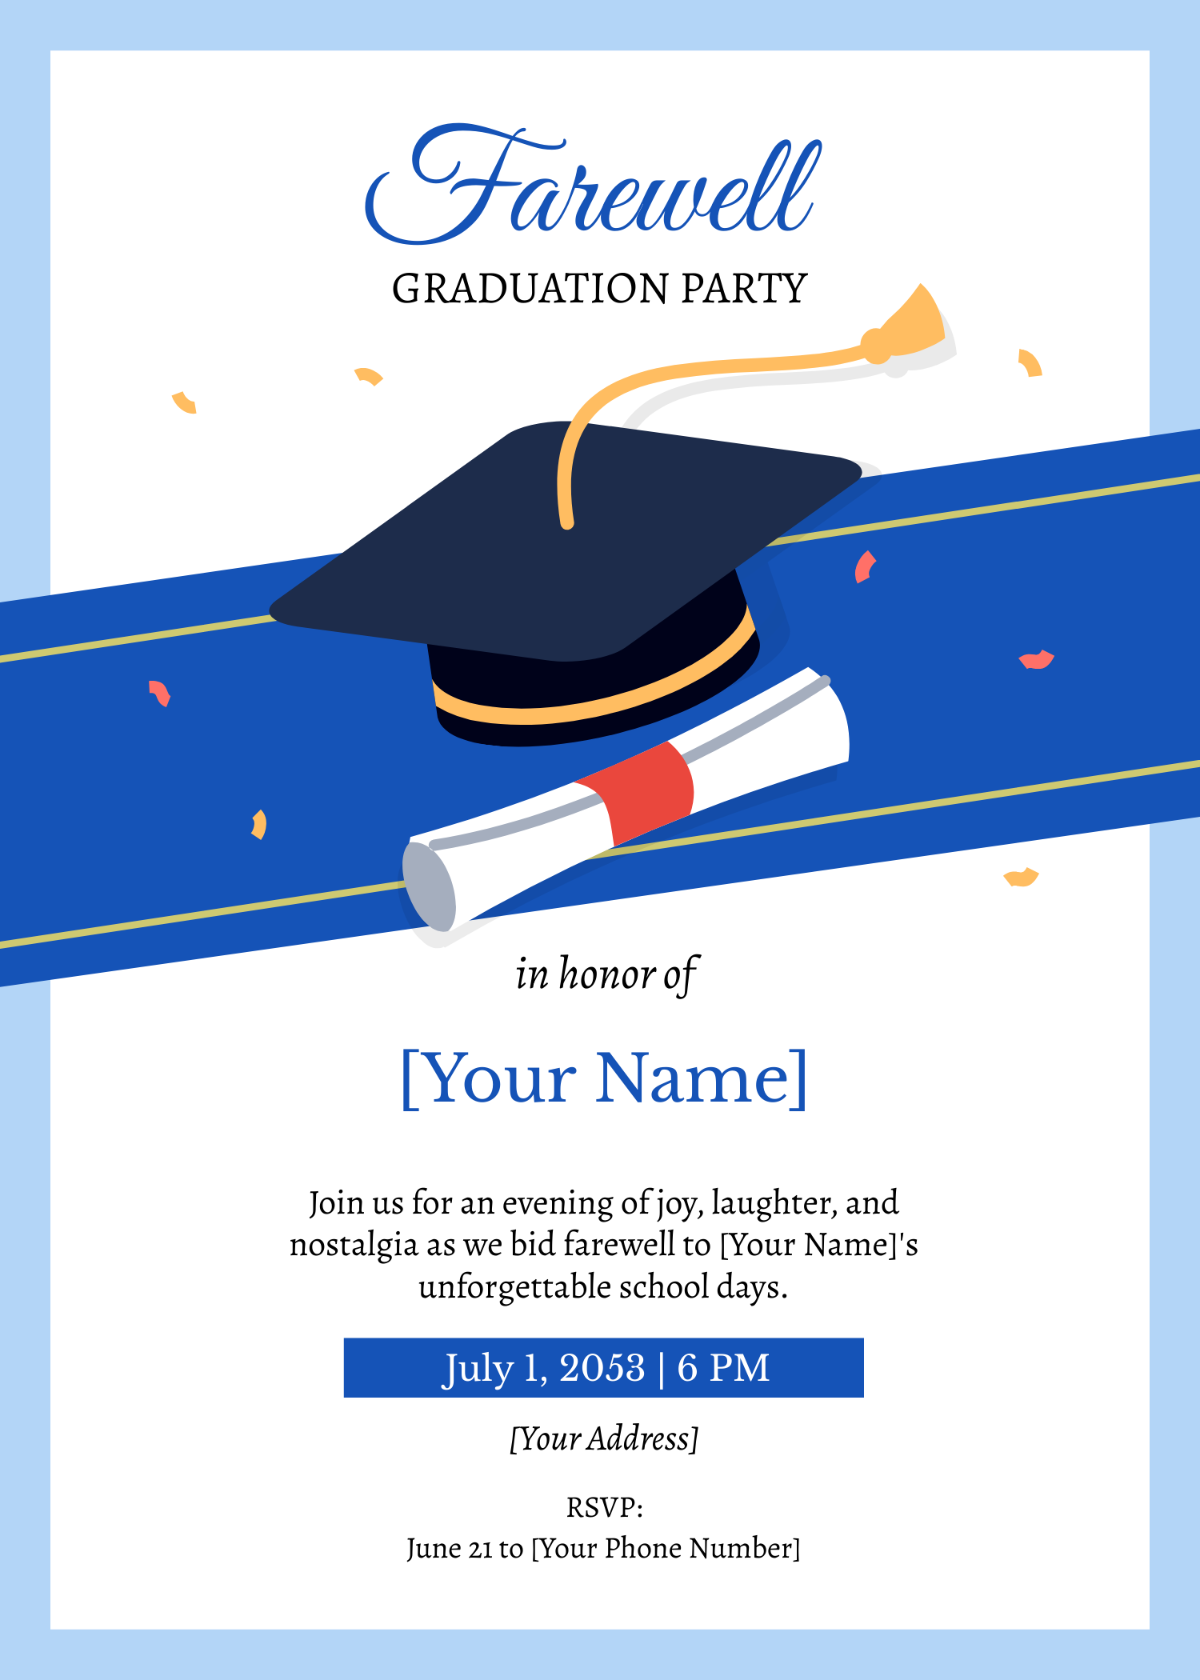 Farewell Graduation Party Invitation Template